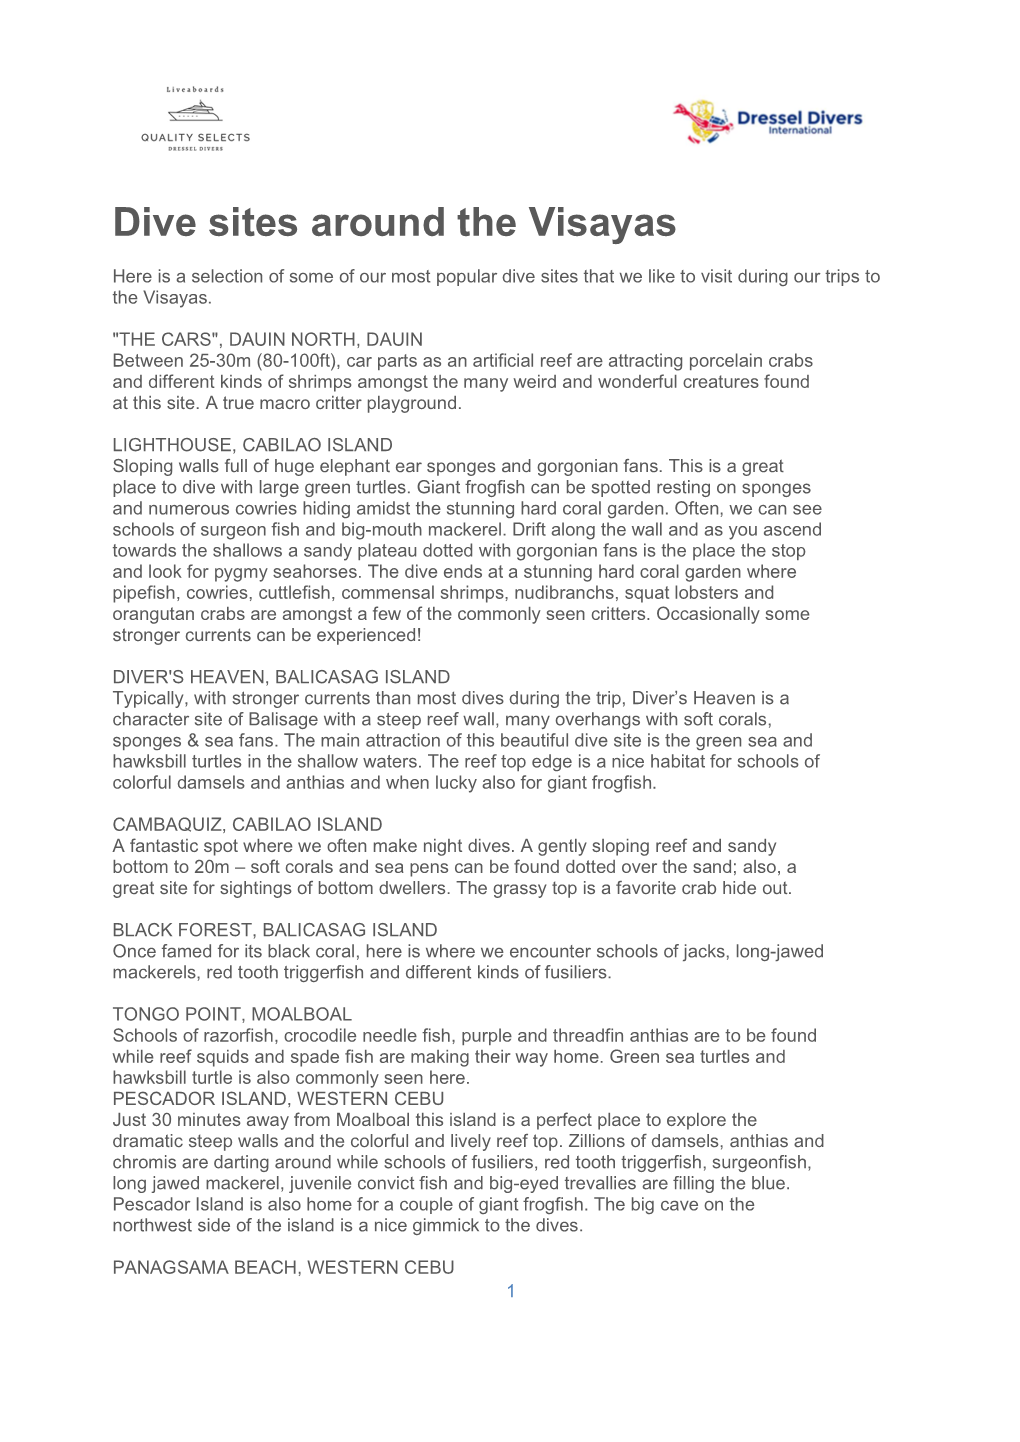 Dive Sites Around the Visayas